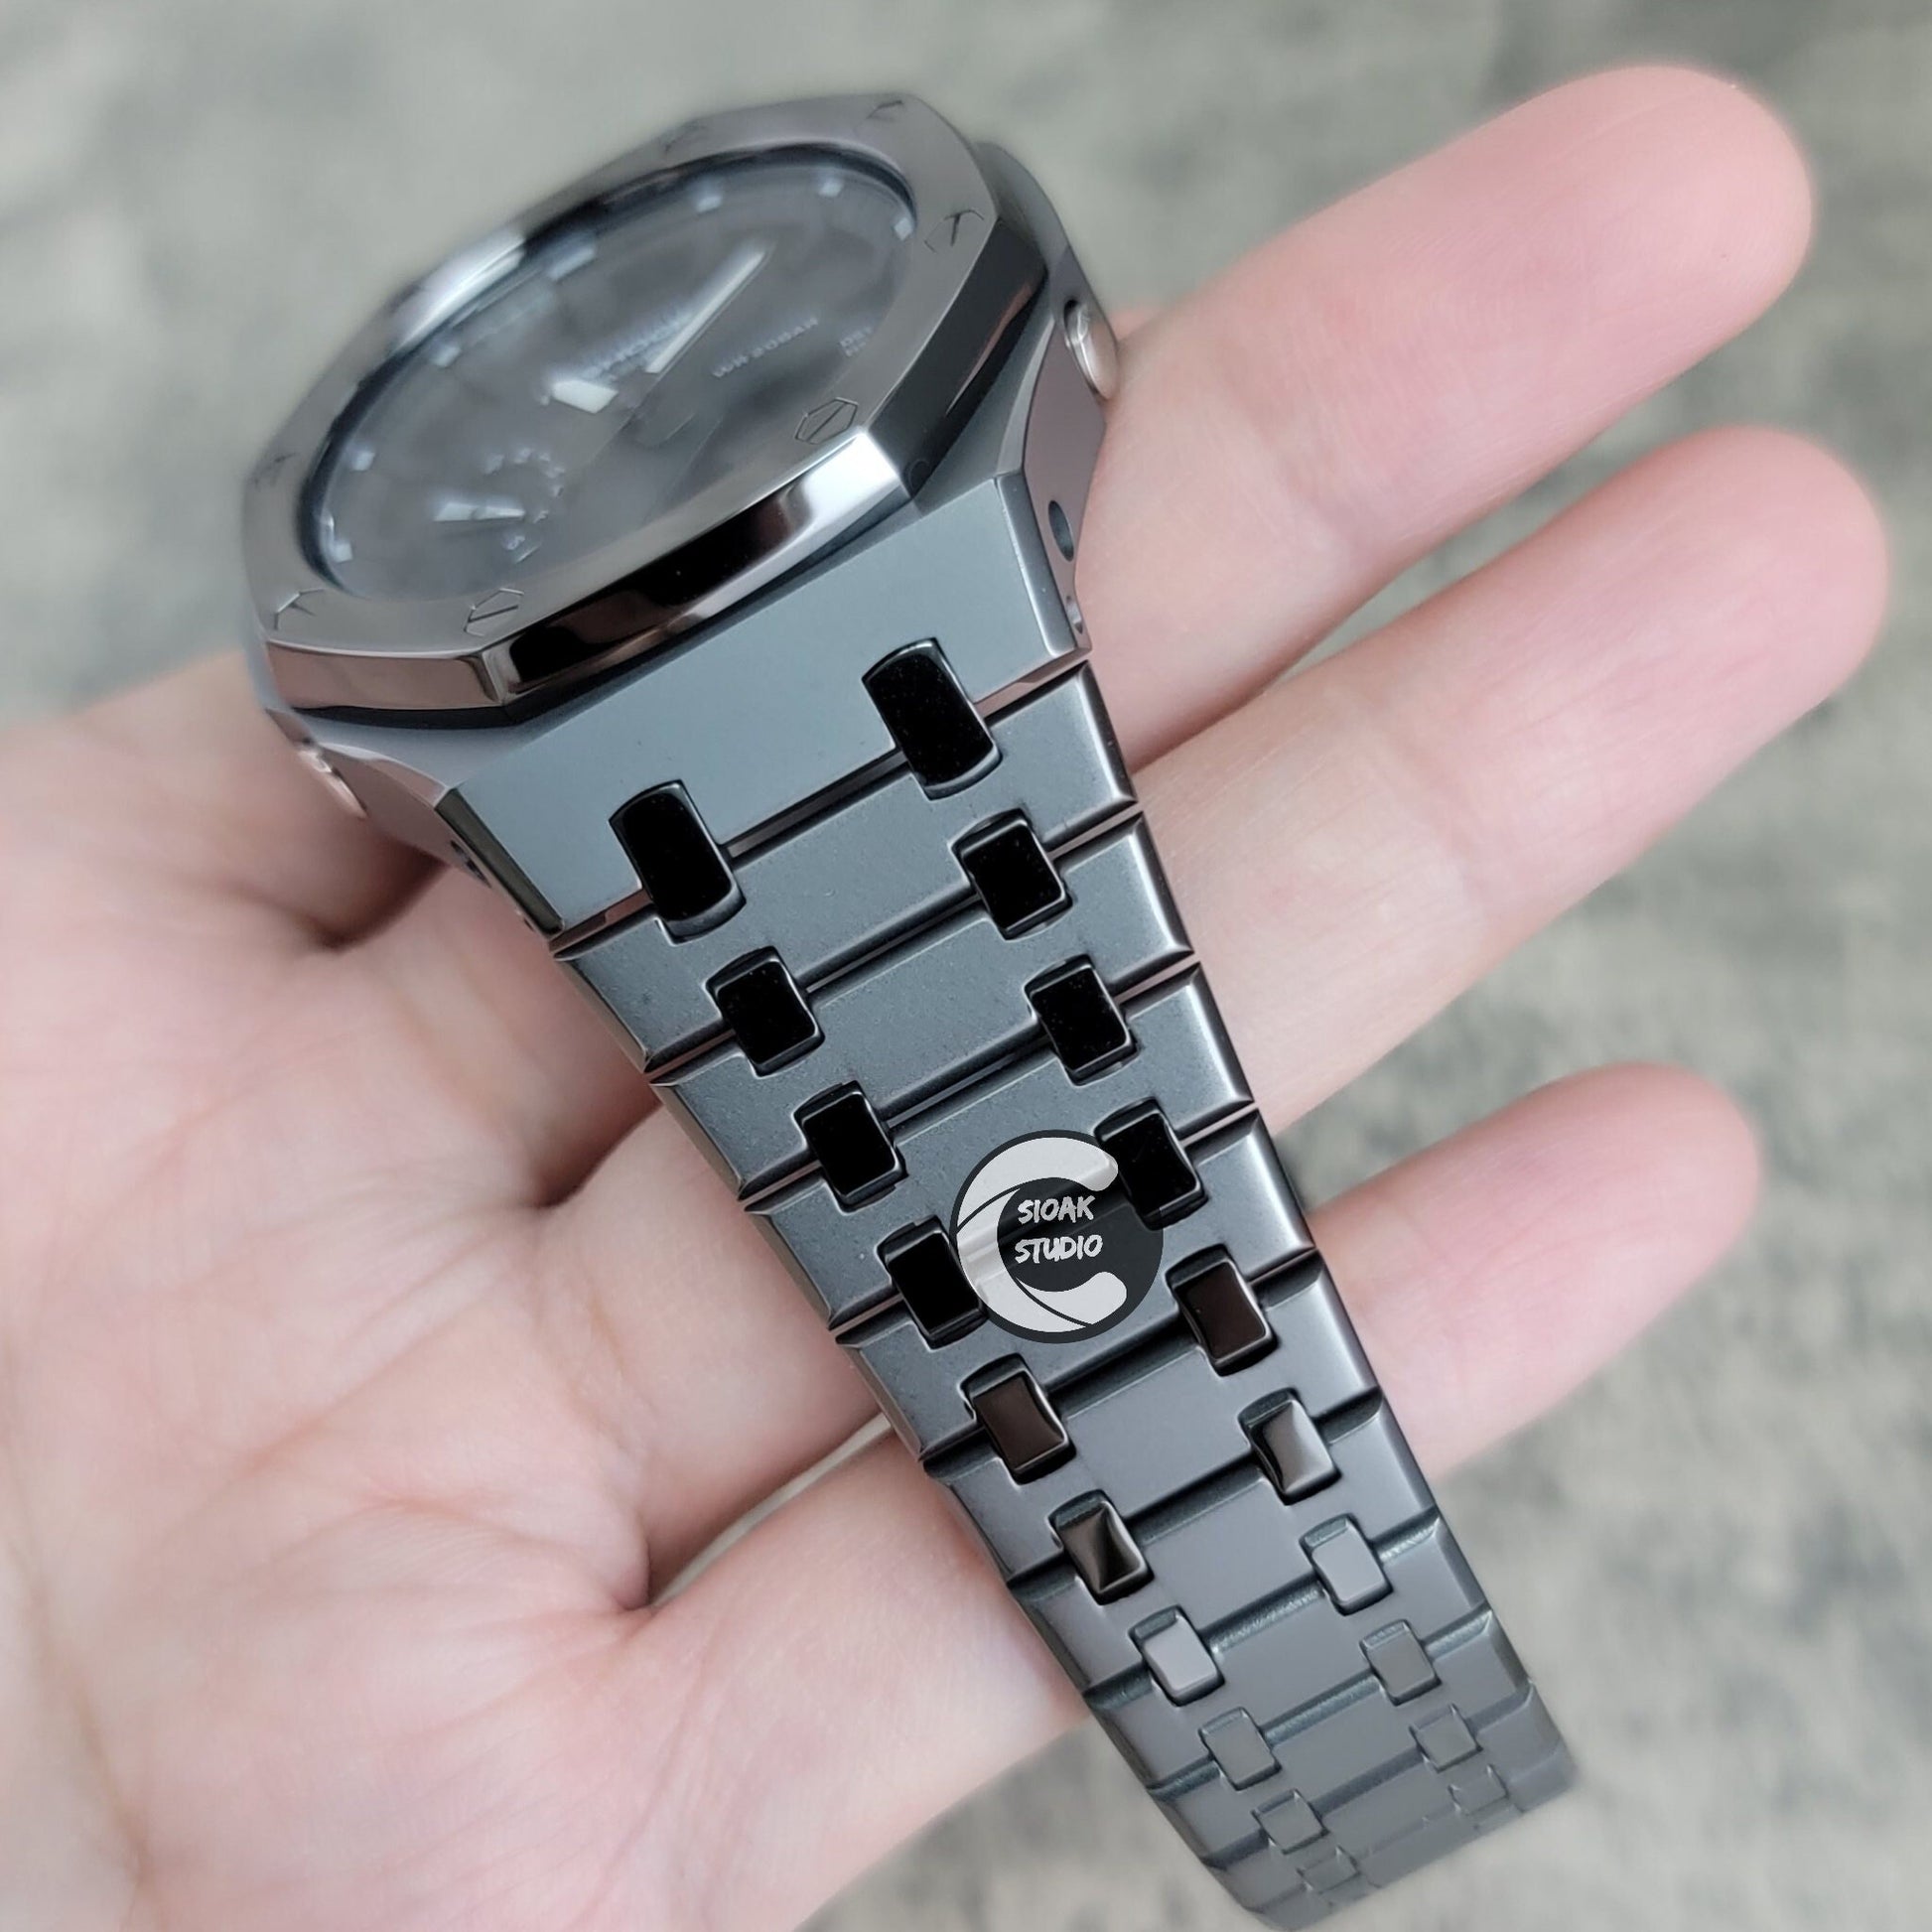 Casioak Mod Watch Polished Grey Case Metal Strap Black Time Mark Black Dial 44mm - Casioak Studio